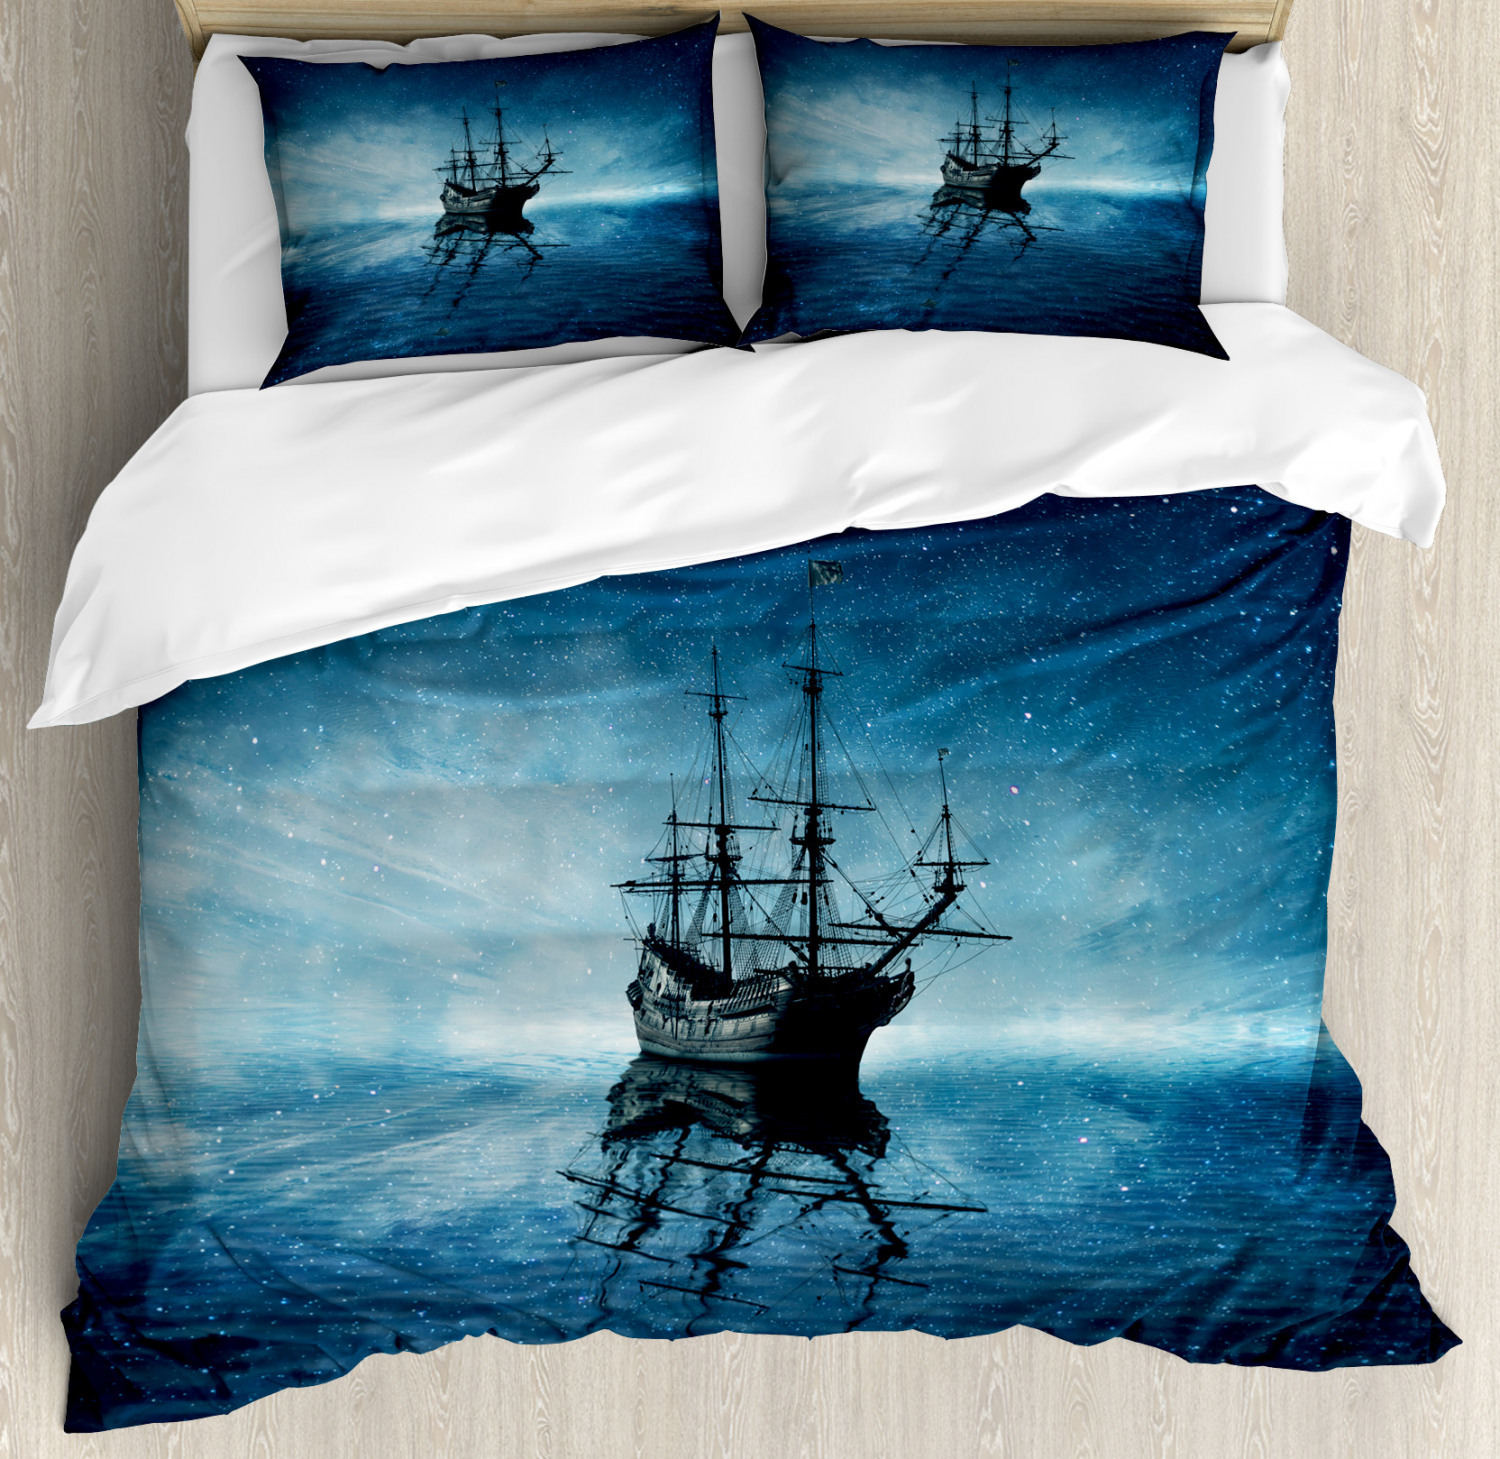 Pirate Ship Duvet Cover Set With Pillow Shams Night Sky Ocean